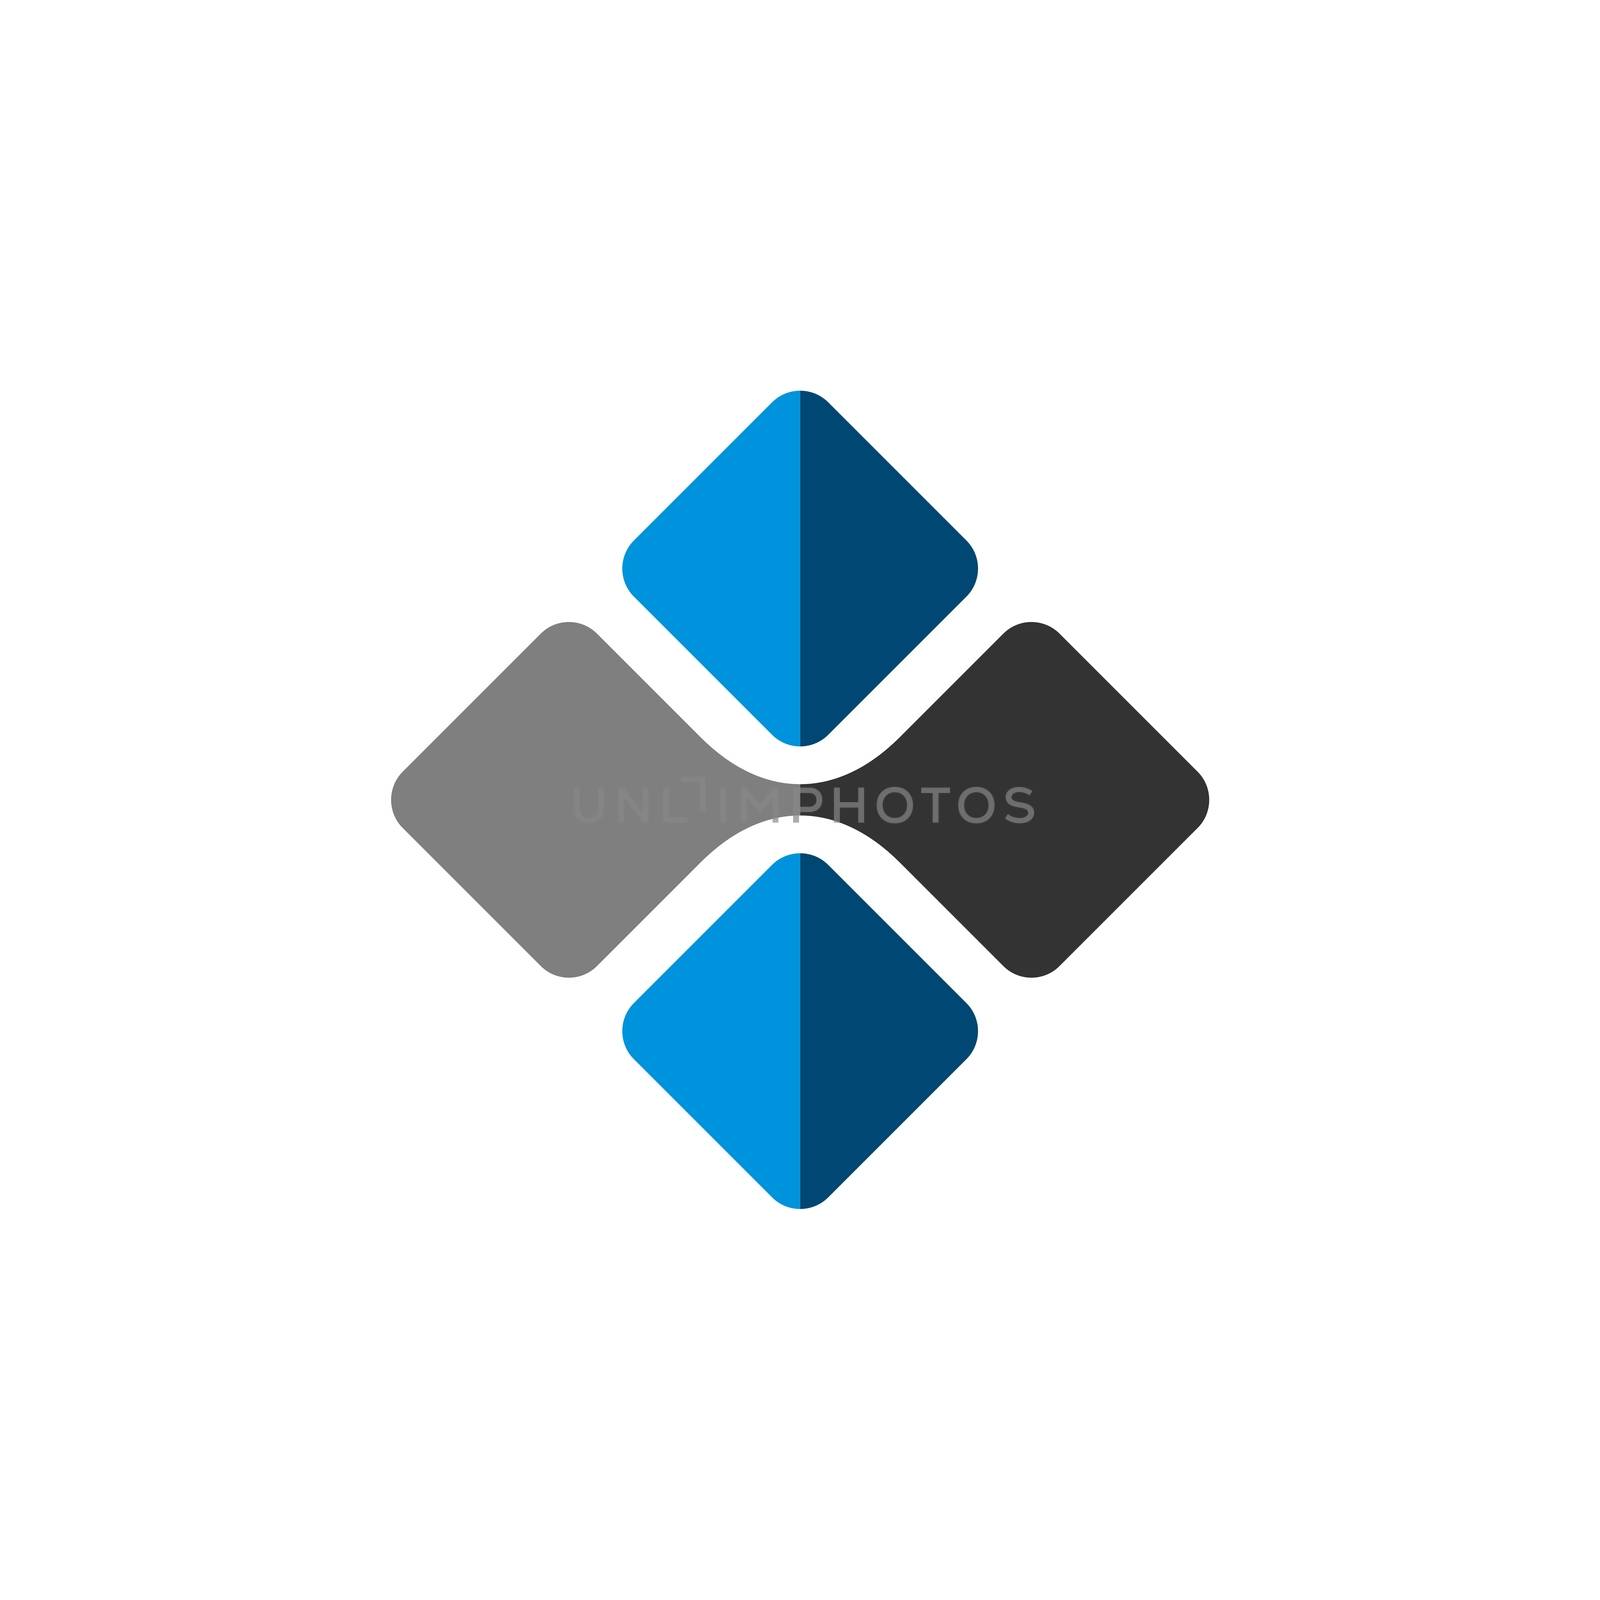 Blue / Grey Square Tile Logo Template Illustration Design. Vector EPS 10. by soponyono1